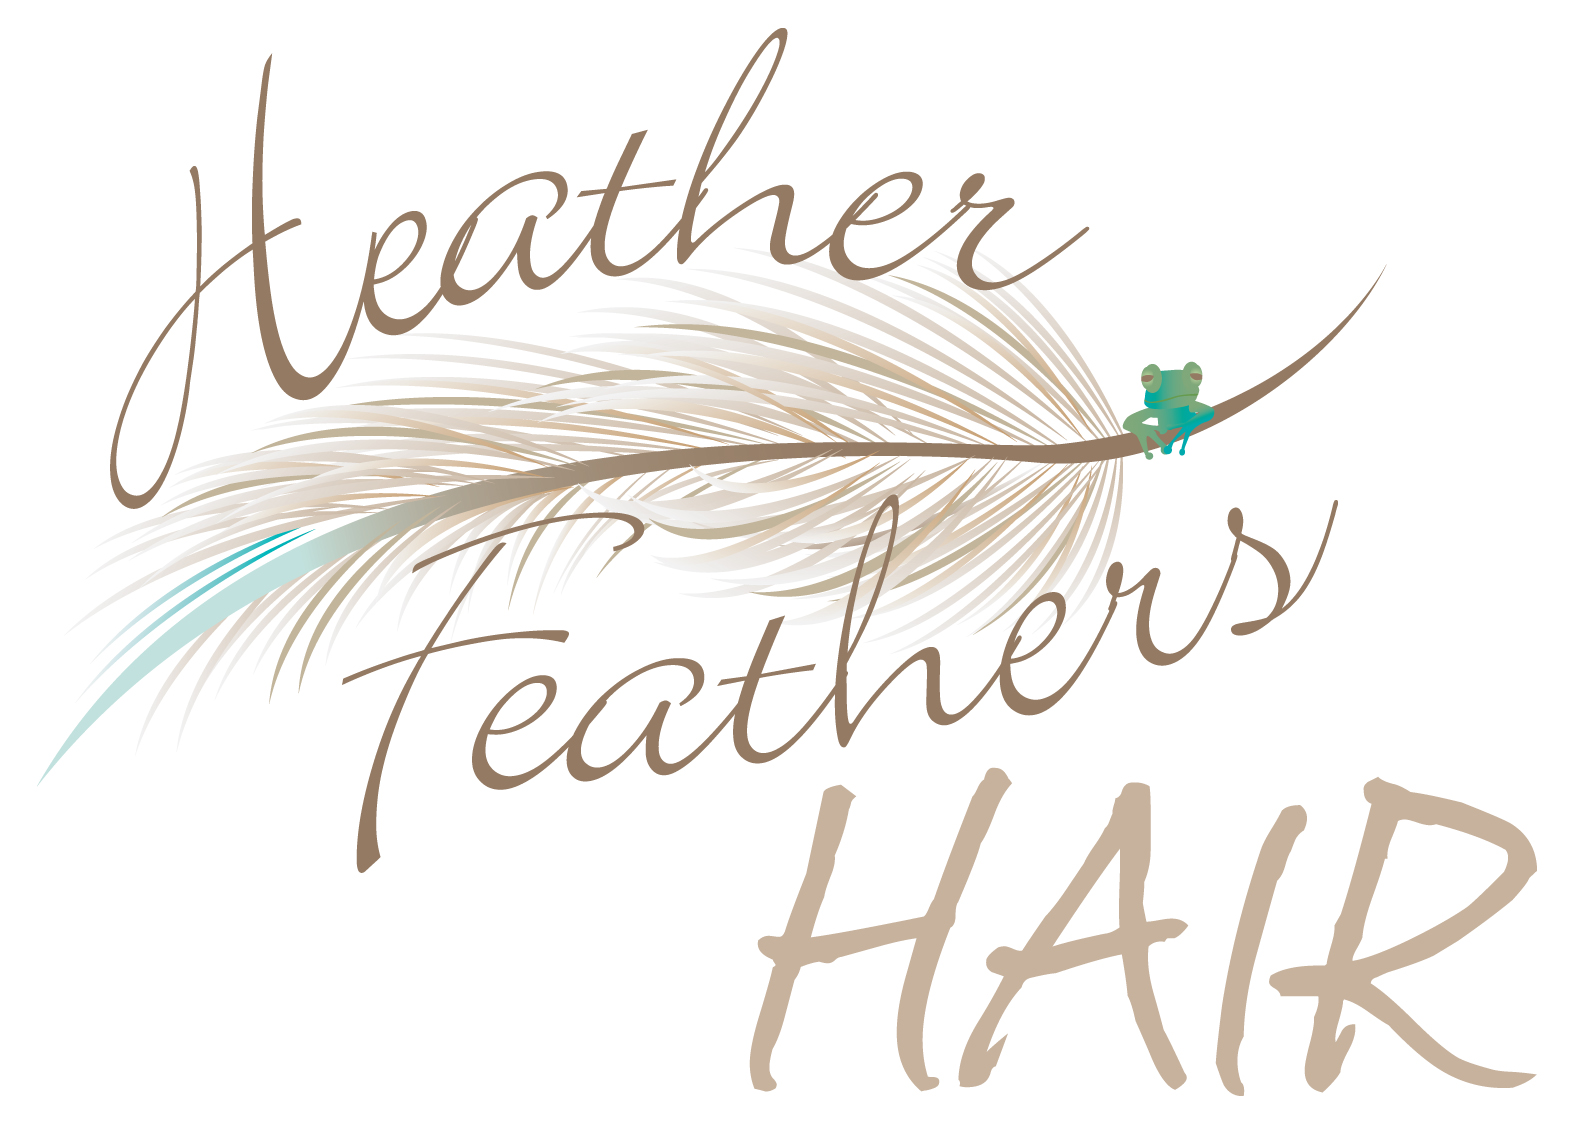 Heather Feathers Hair